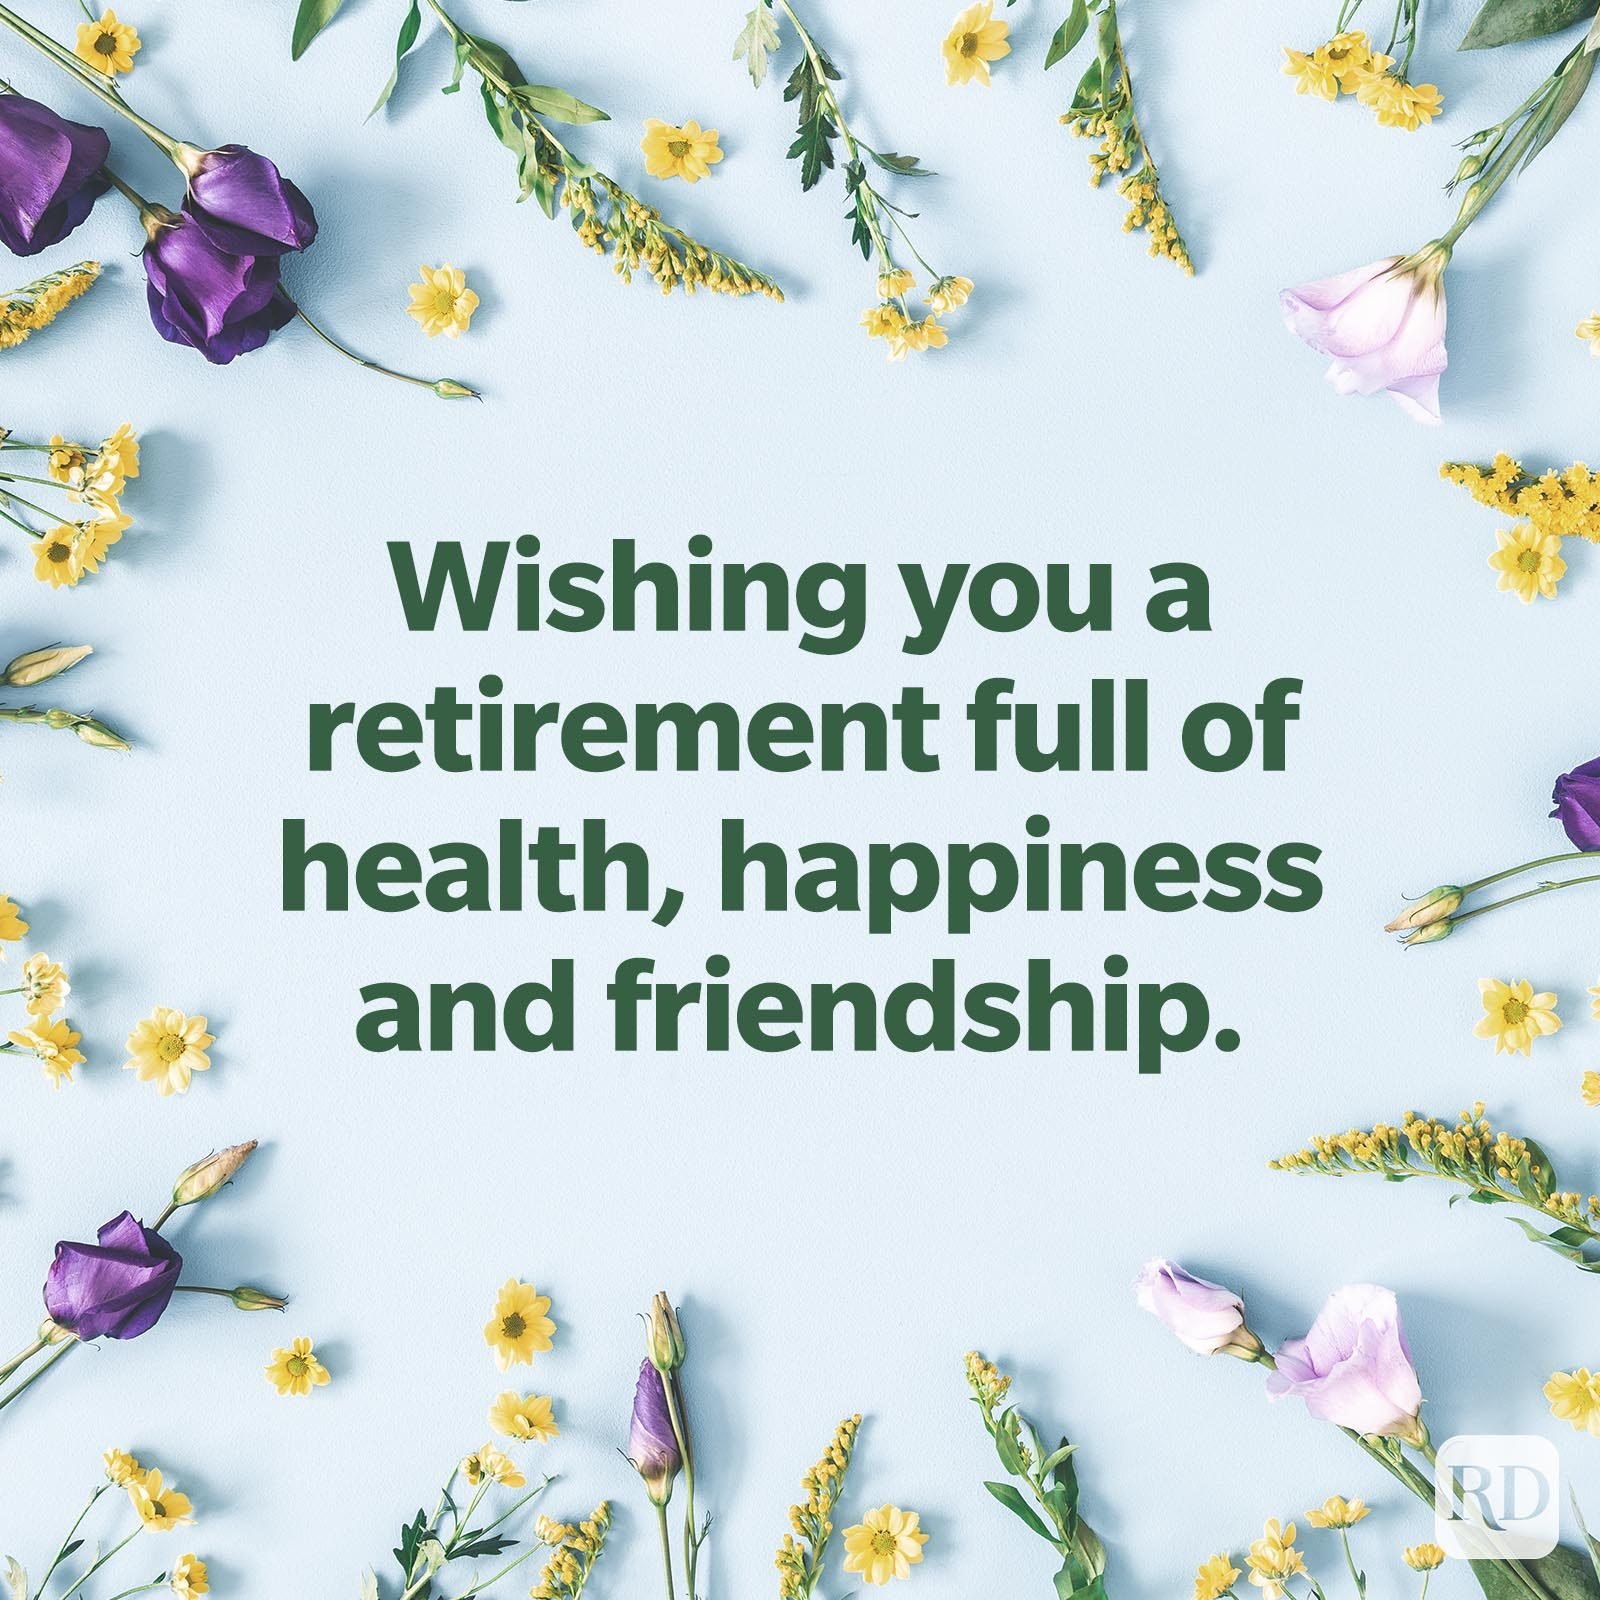 do you congratulate someone on retirement?